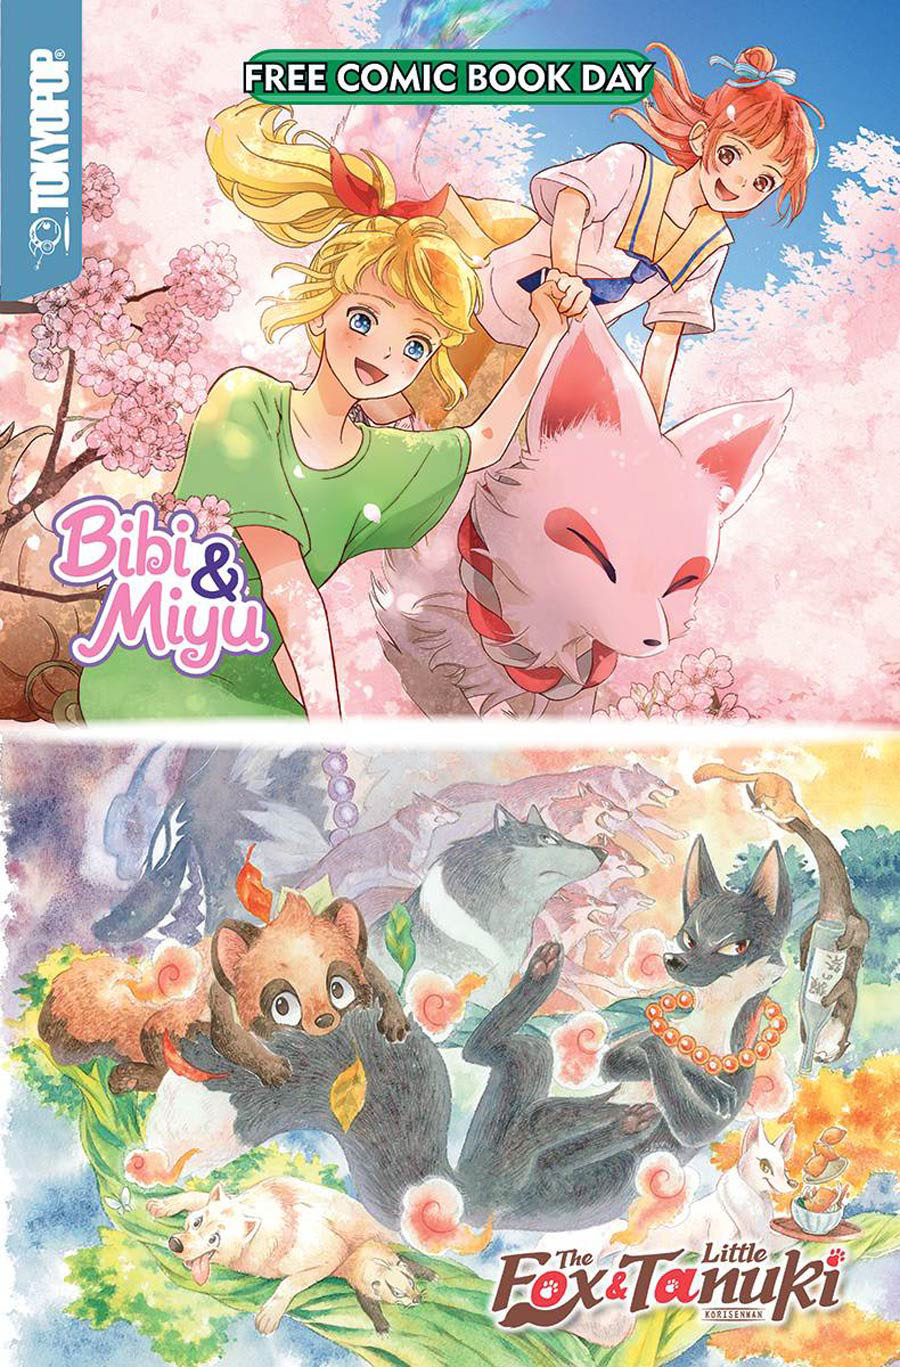 Bibi & Miyu / The Fox & The Little Tanuki Preview FCBD 2020